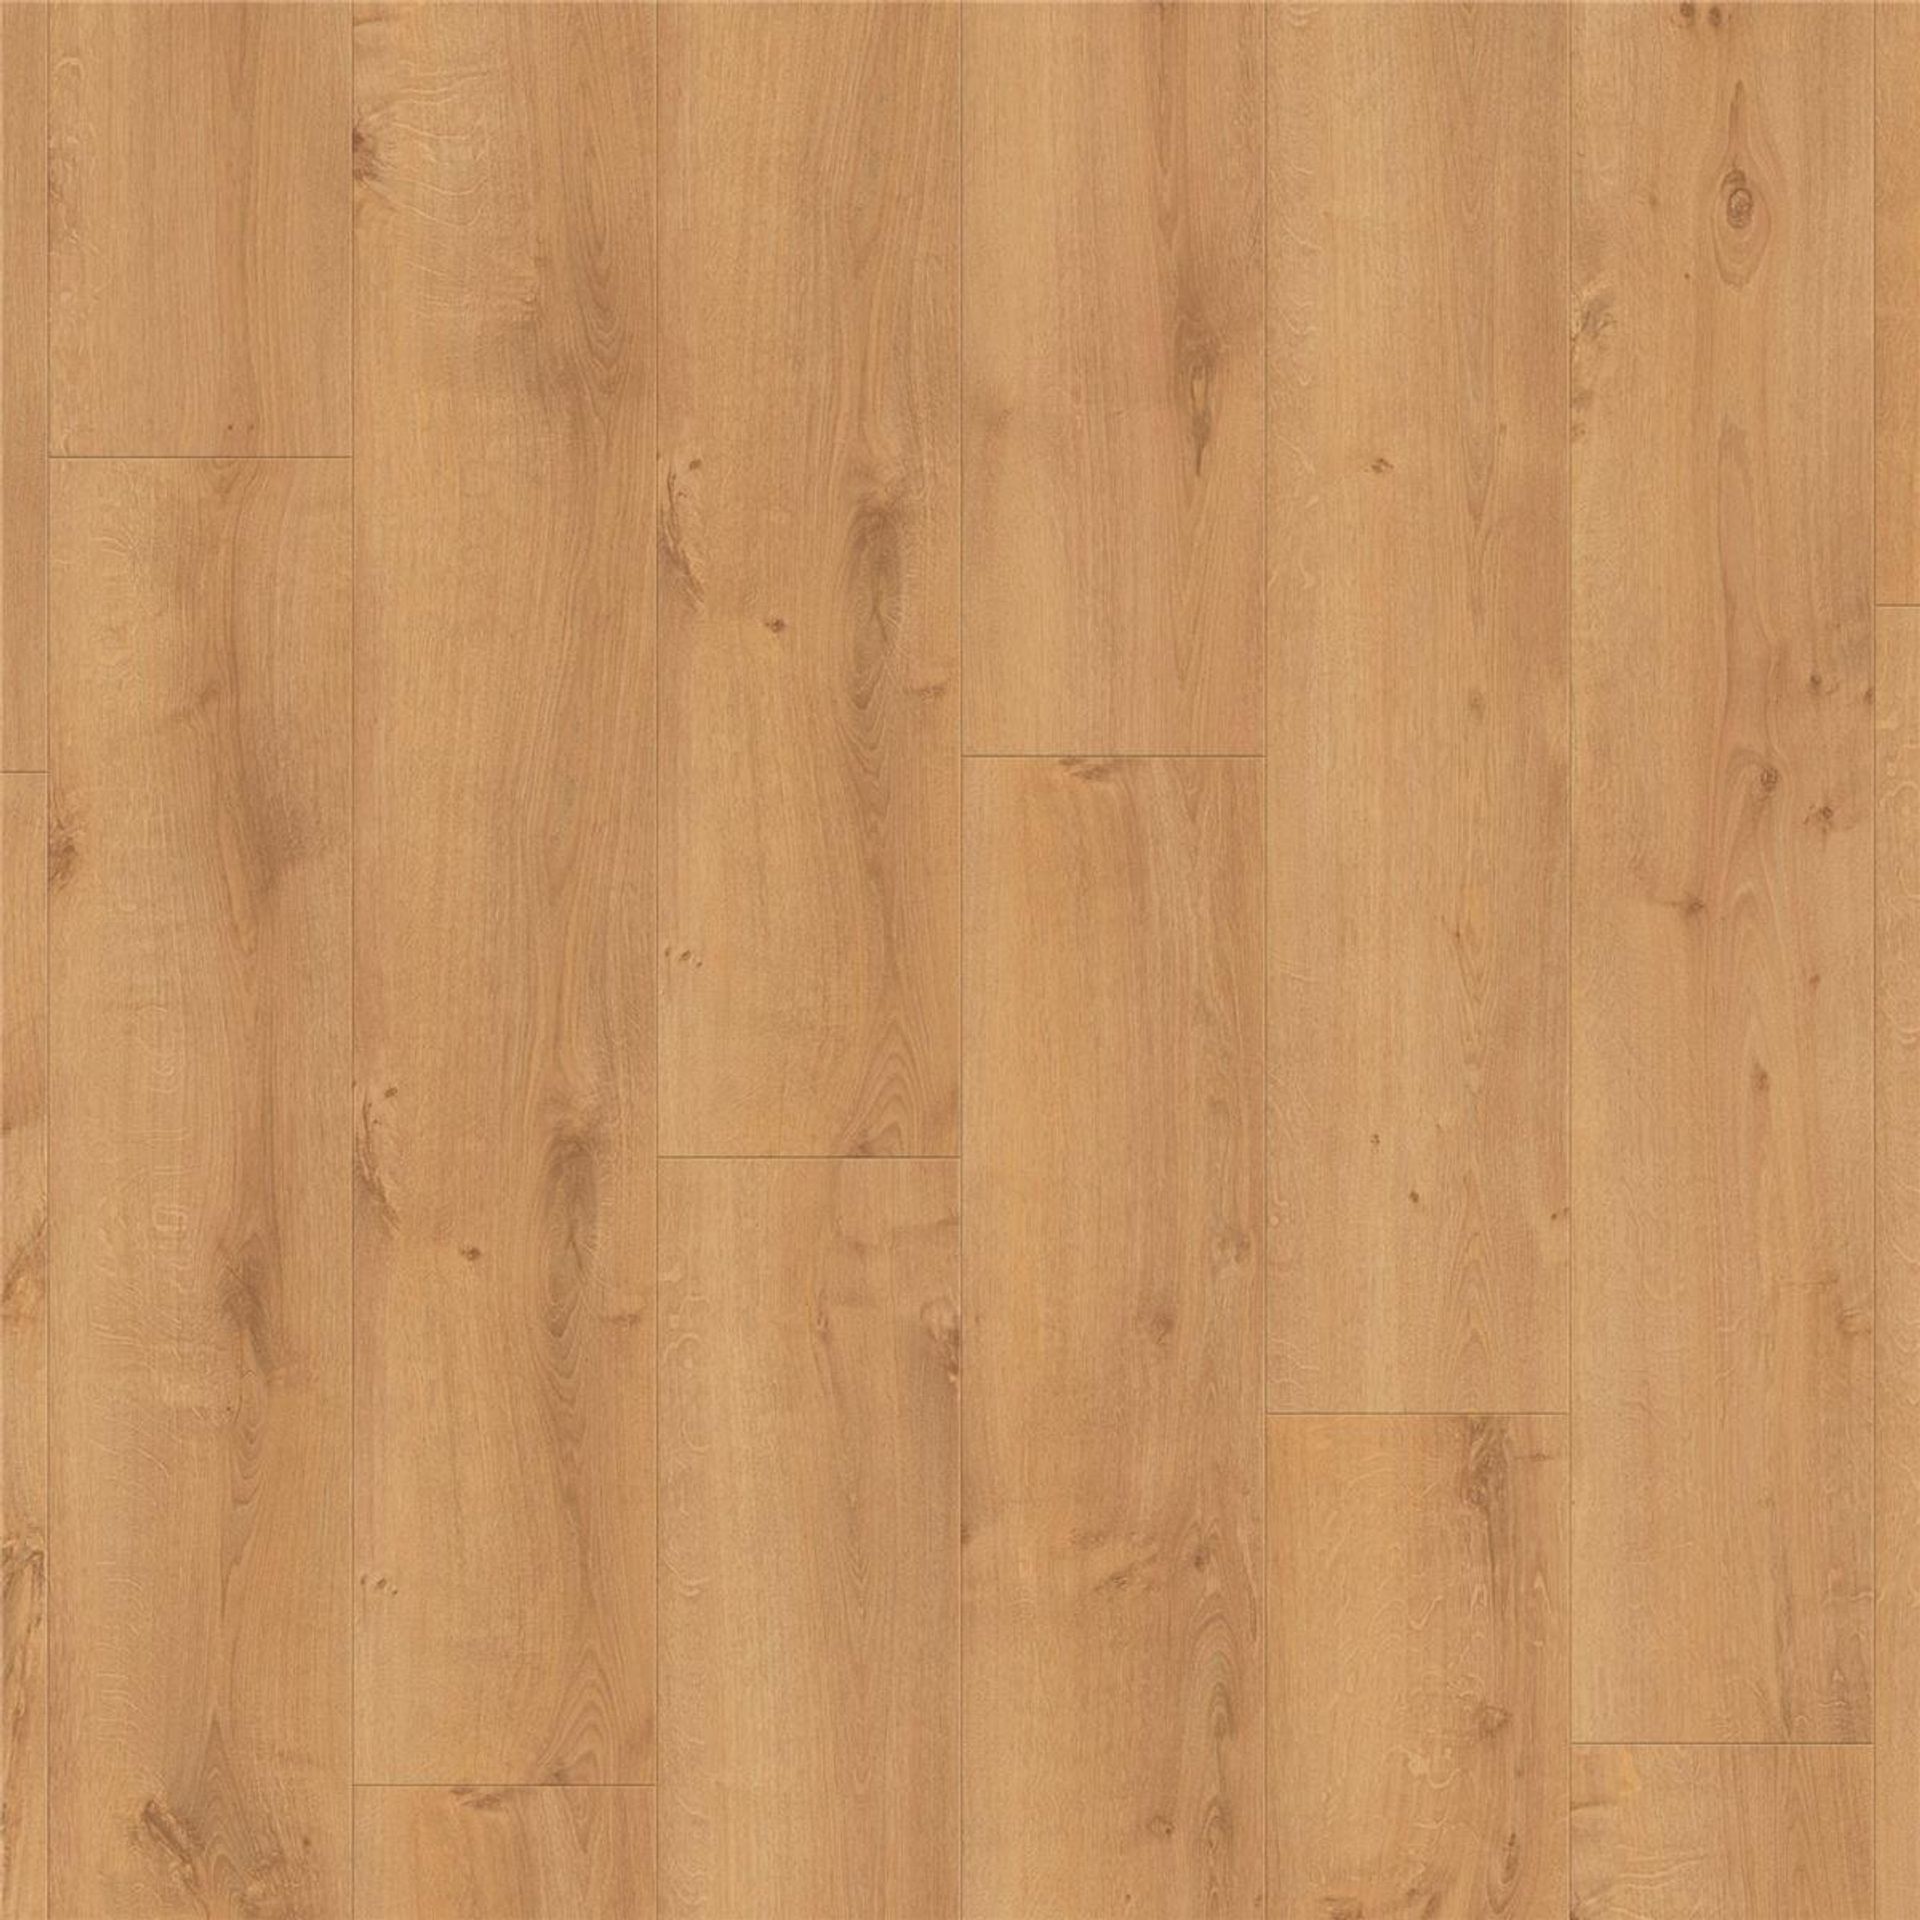 Designboden CLASSICS-Rustic Oak-Warm Natural Planke 120 cm x 20 cm - Nutzschichtdicke 0,70 mm